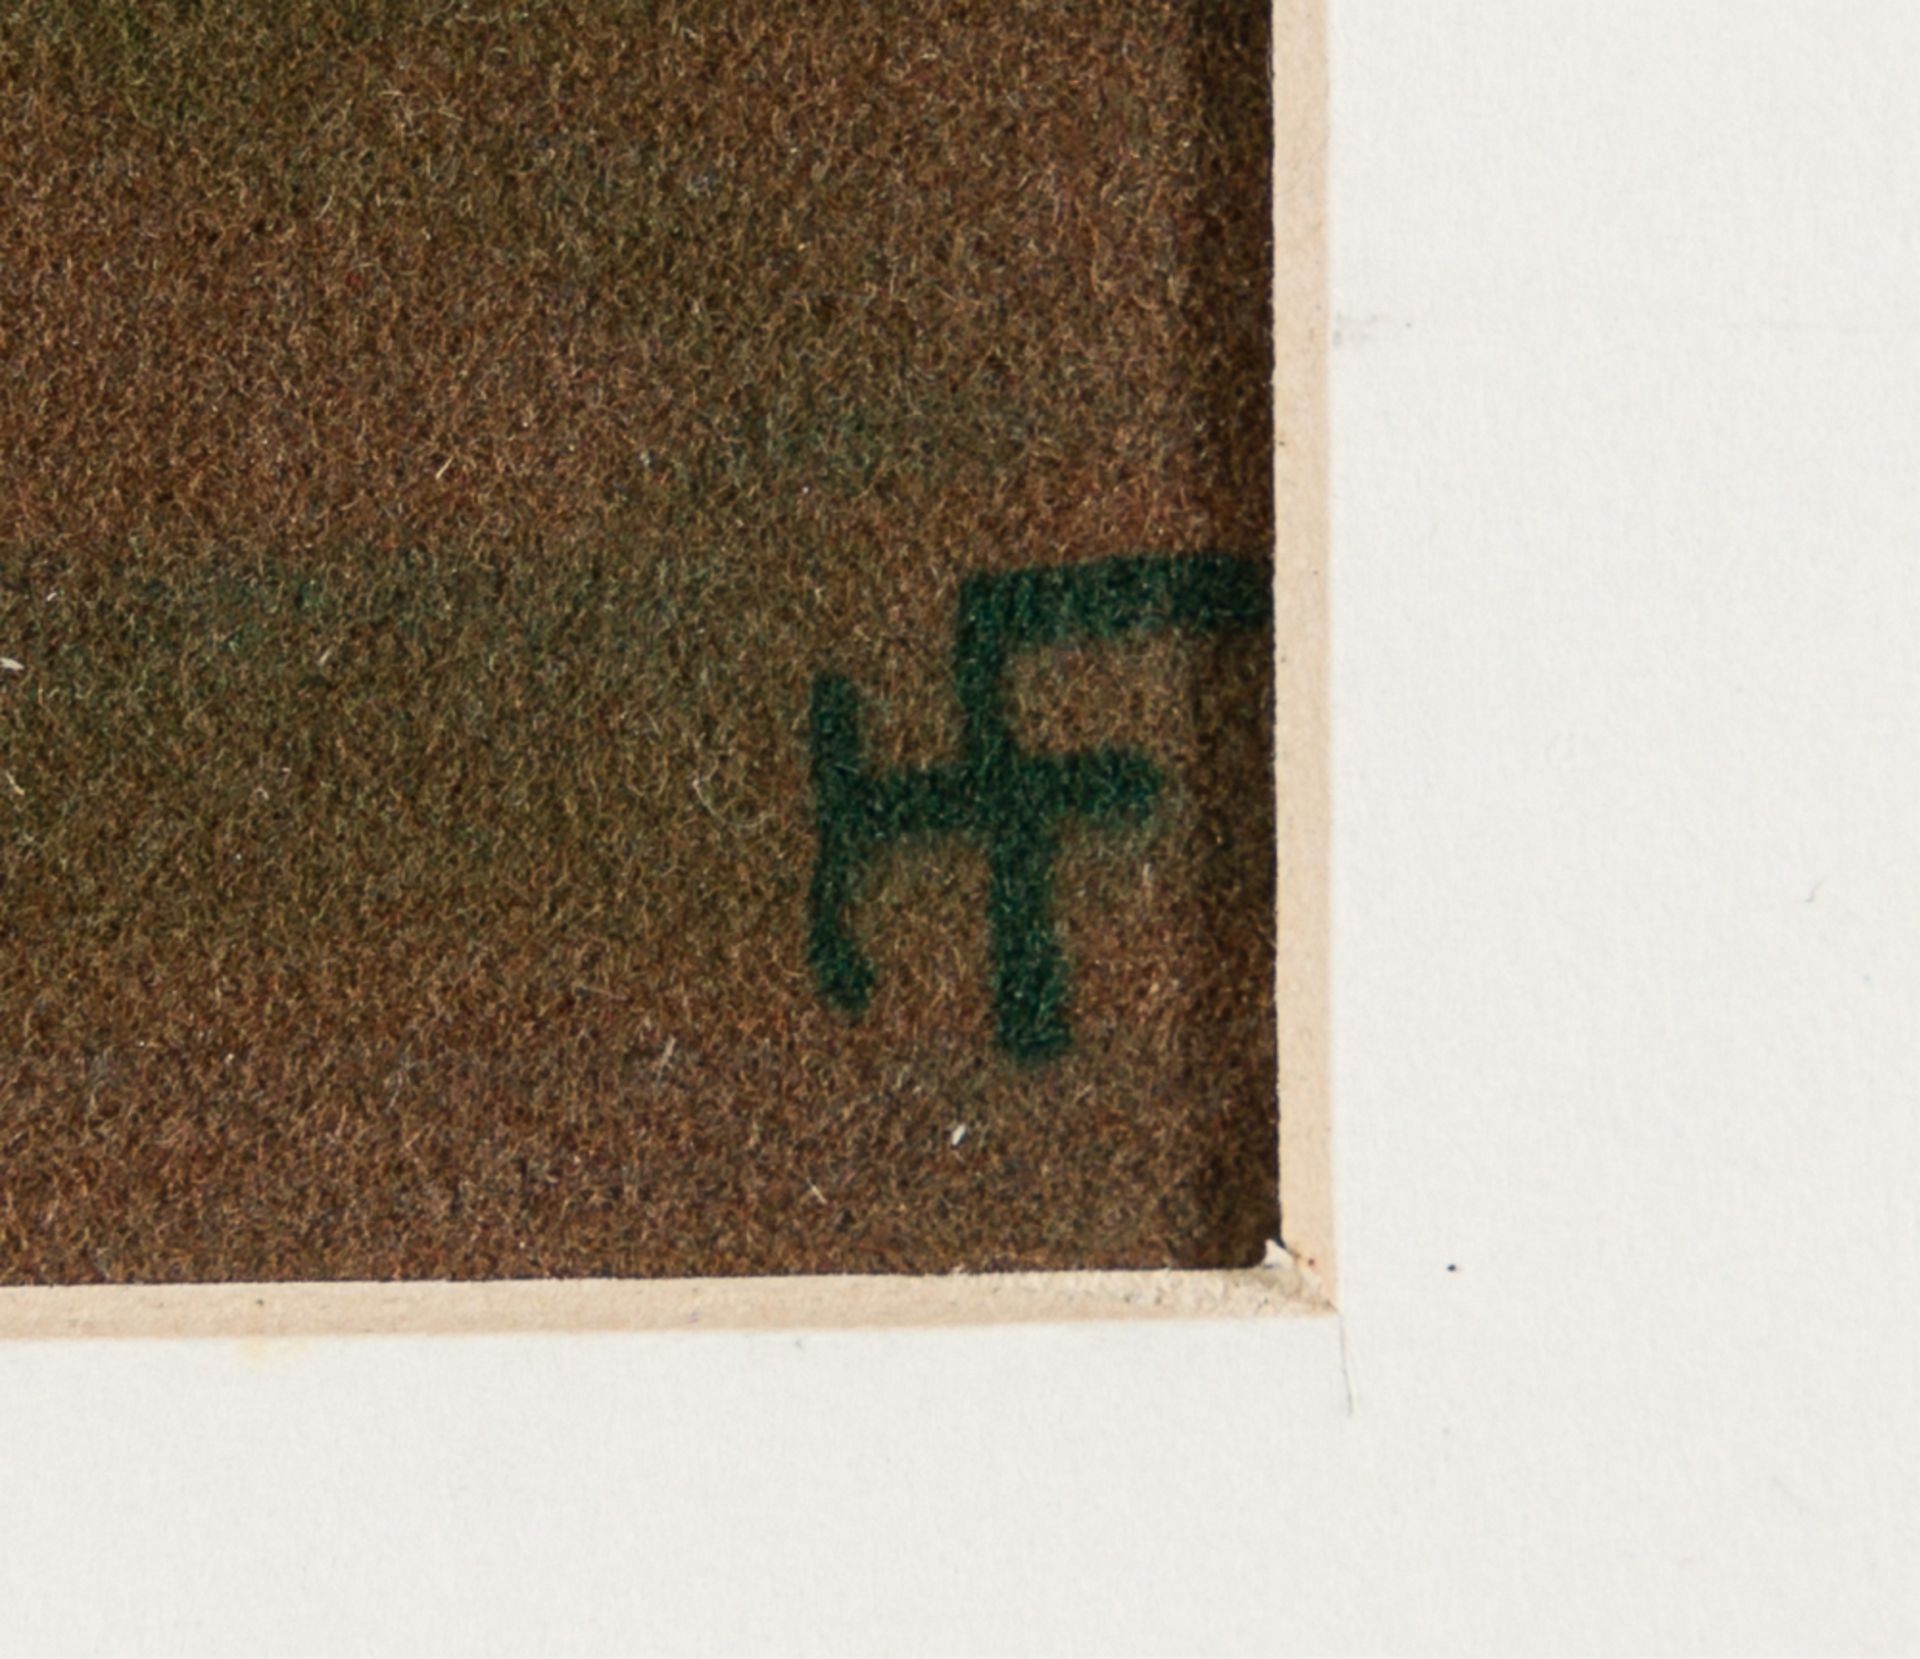 Franta, Hans(1893-1982)Siberiasoft pastelsmonogrammed lower right13,2 x 17,7 in - Image 3 of 3